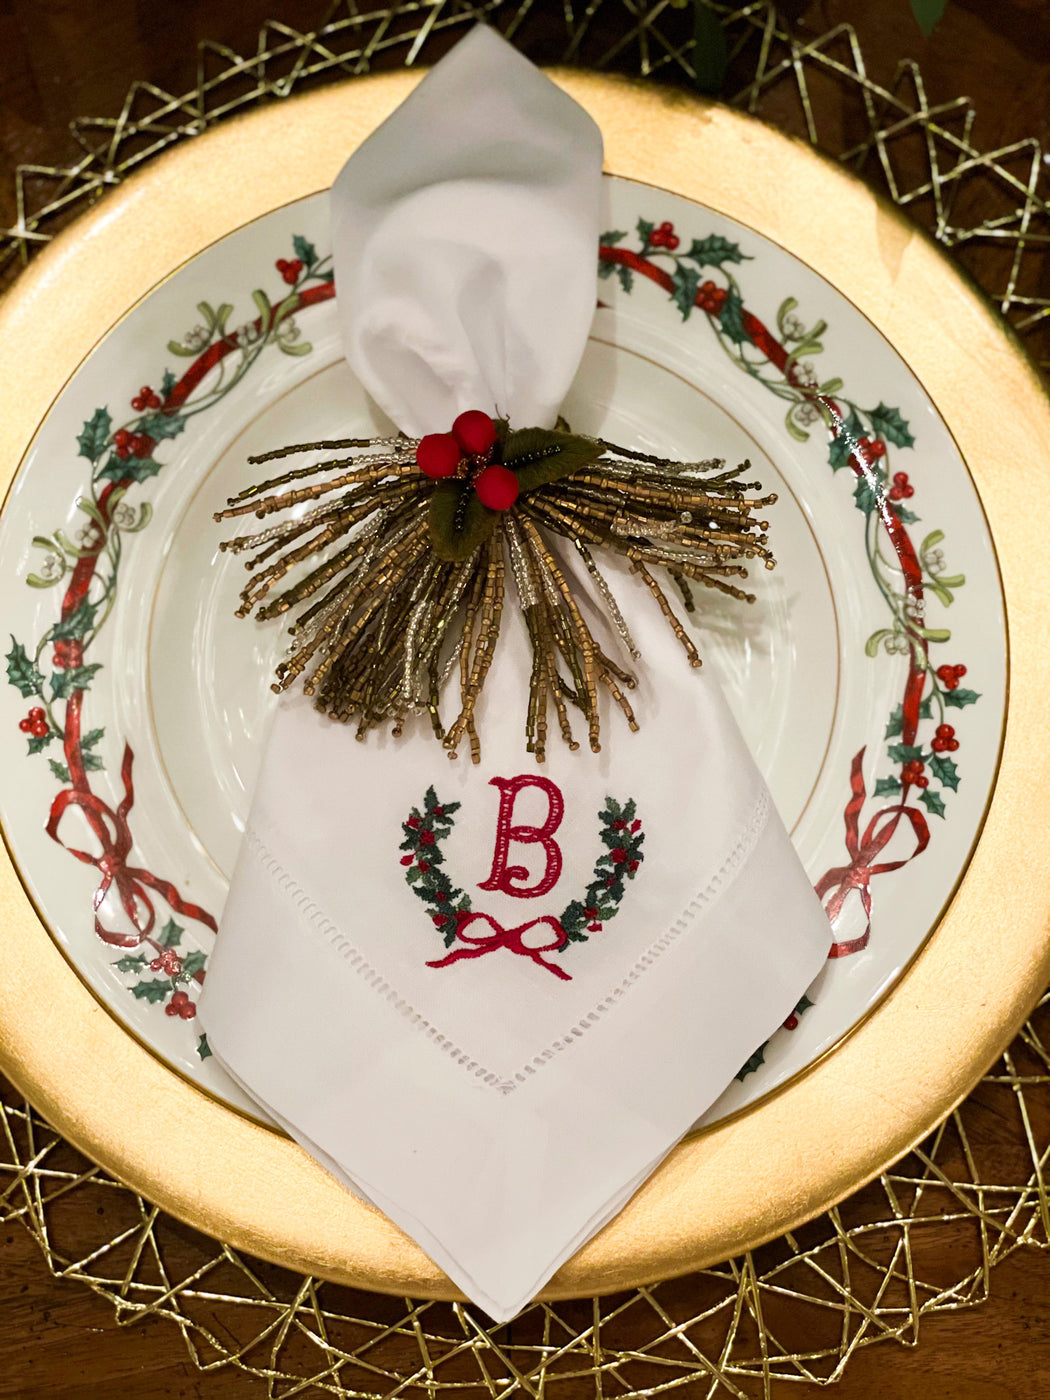 Linen/Cotton Blend Hemstitched Dinner Napkins - Christmas Wreath Single Initial